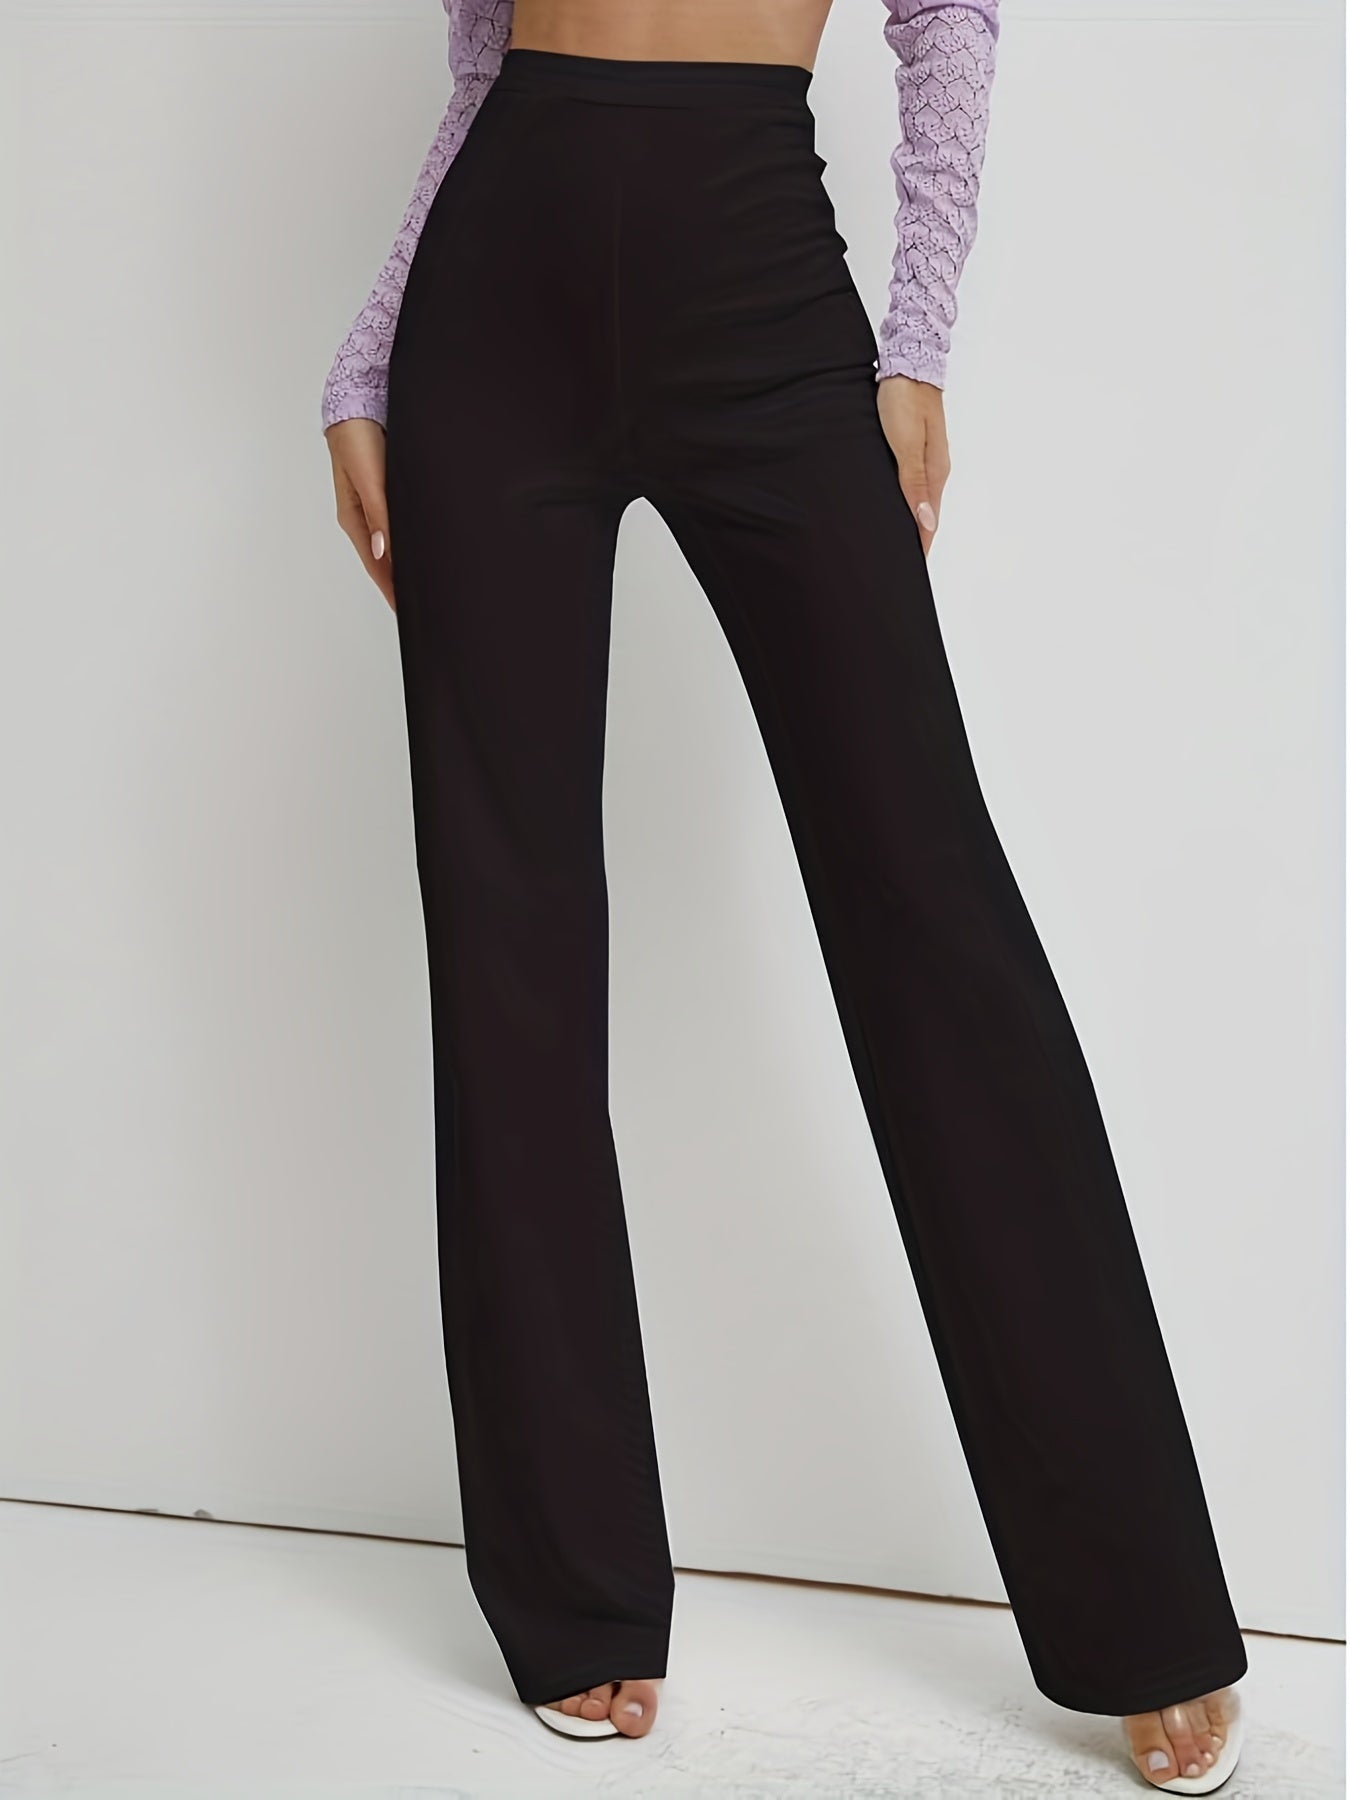 Solid Straight Leg Pants, Casual High Waist Work Pants, Women's Clothing